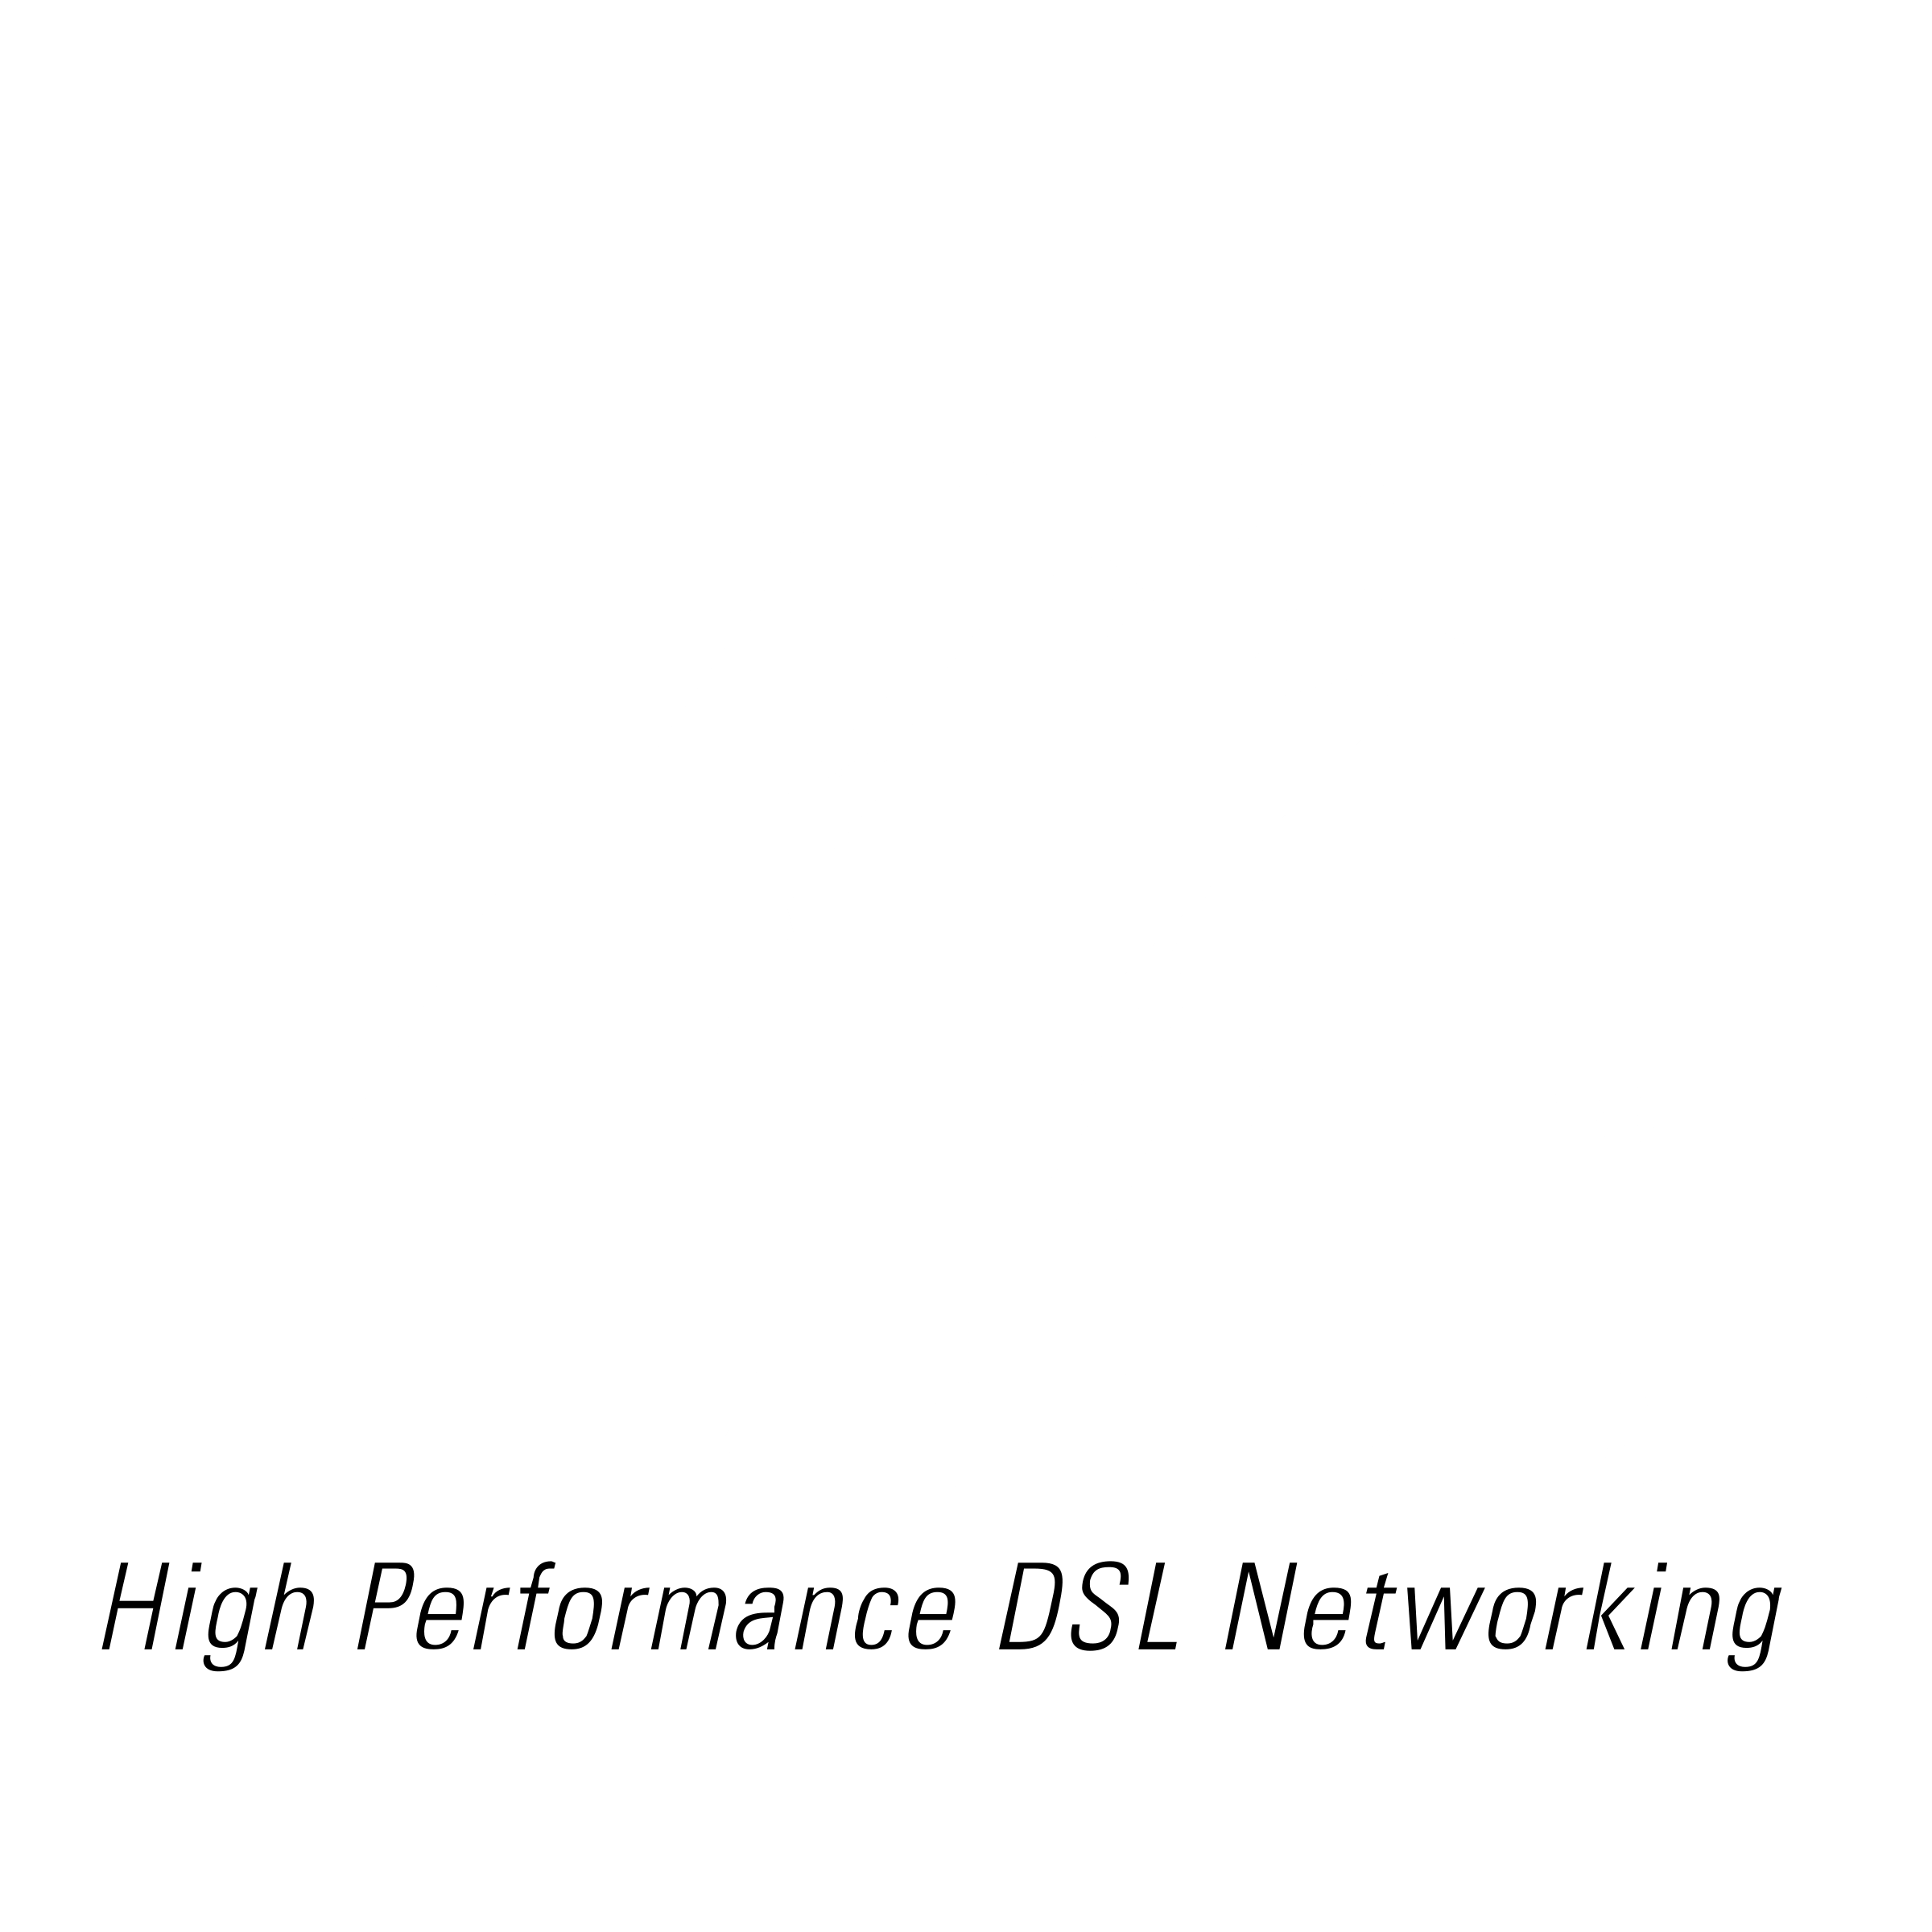 Copper Mountain Logo - Copper Mountain Logo PNG Transparent & SVG Vector - Freebie Supply